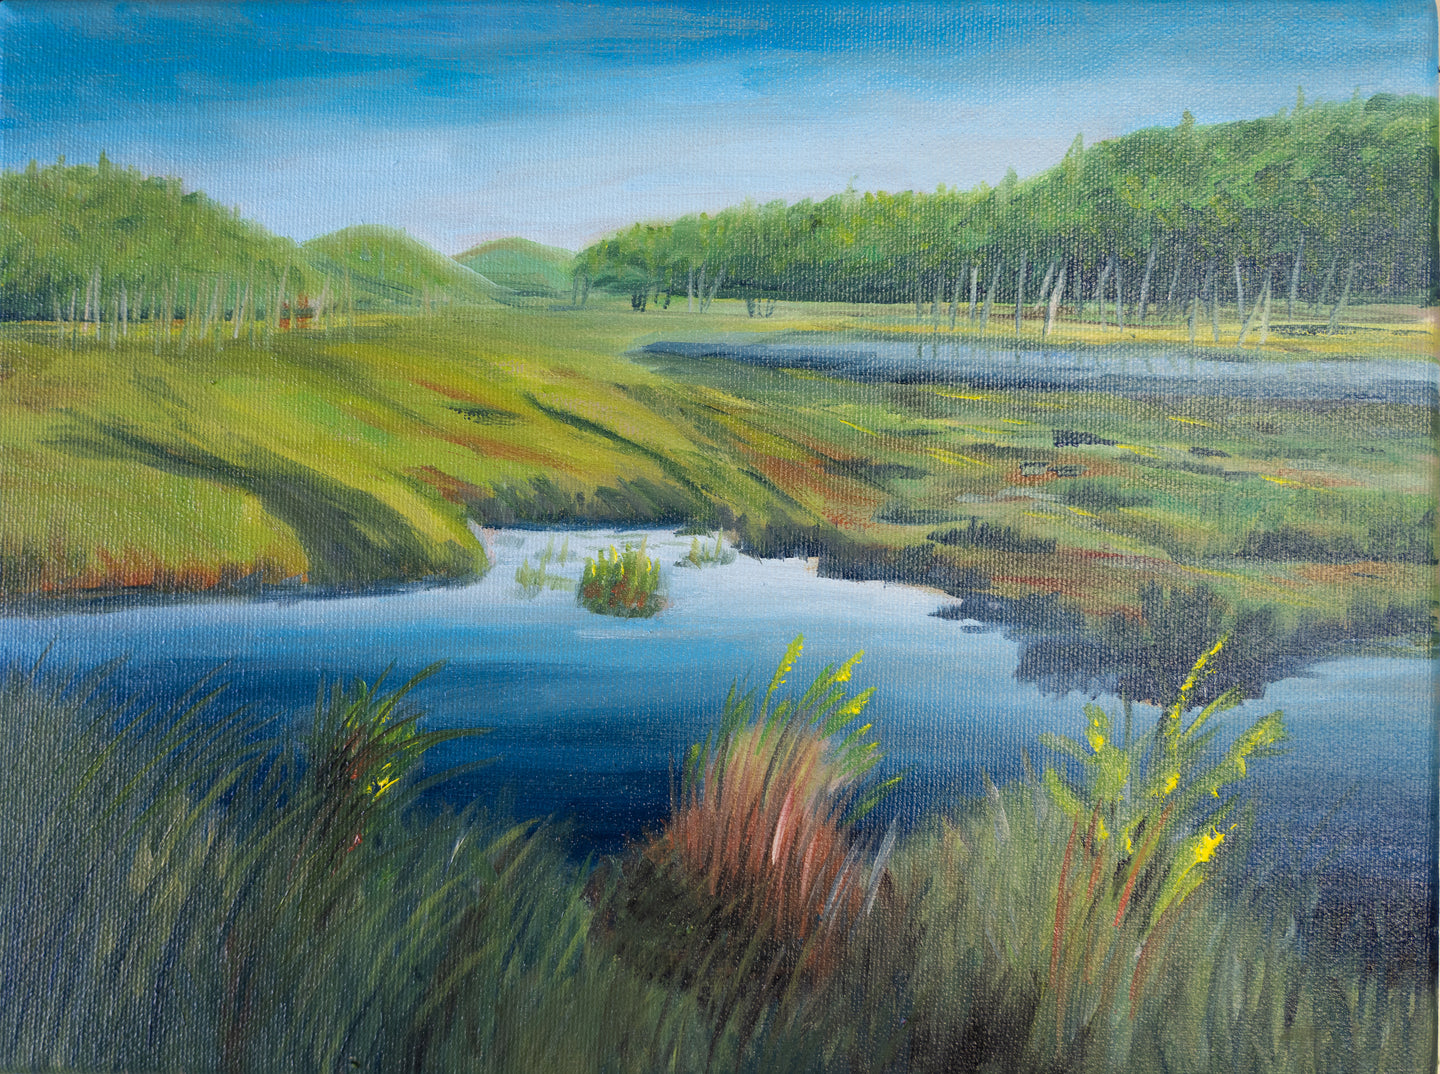 Green marsh